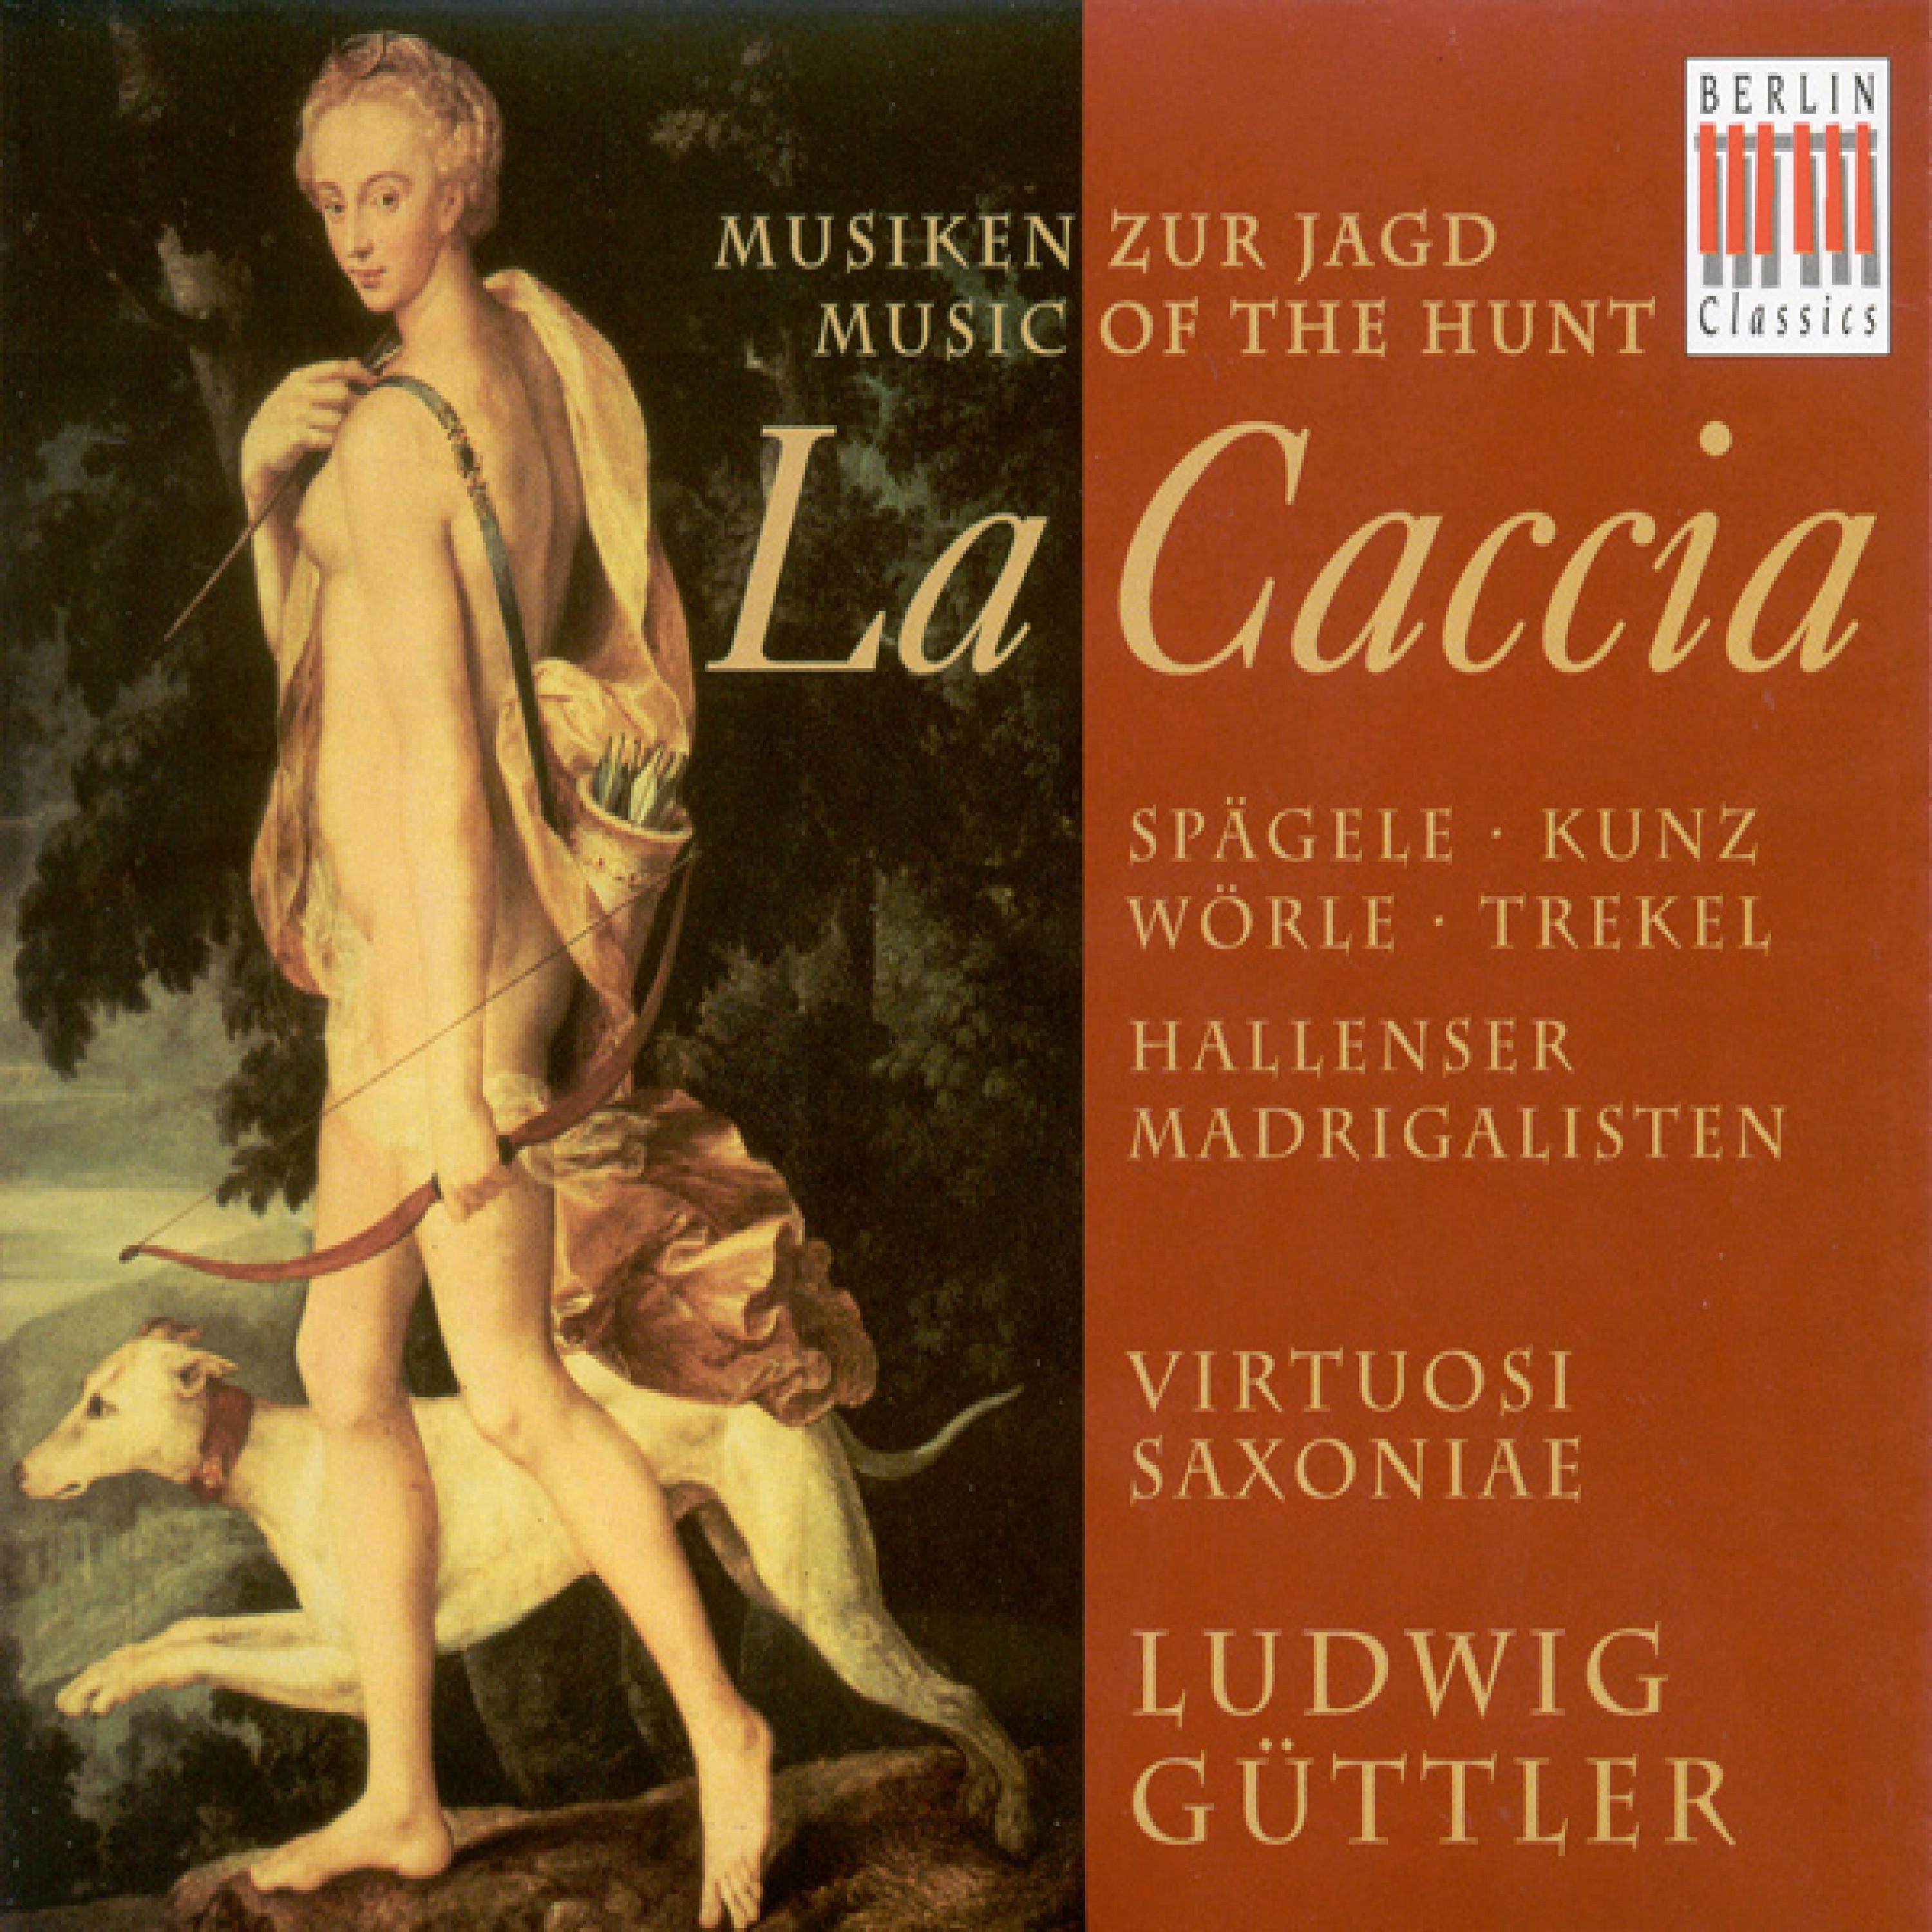 Mozart: Sinfonia da caccia, "Jagd Symphonie" / Vivaldi: Violin Concerto, Op. 8, No. 10, "La caccia" (Music of the Hunt)